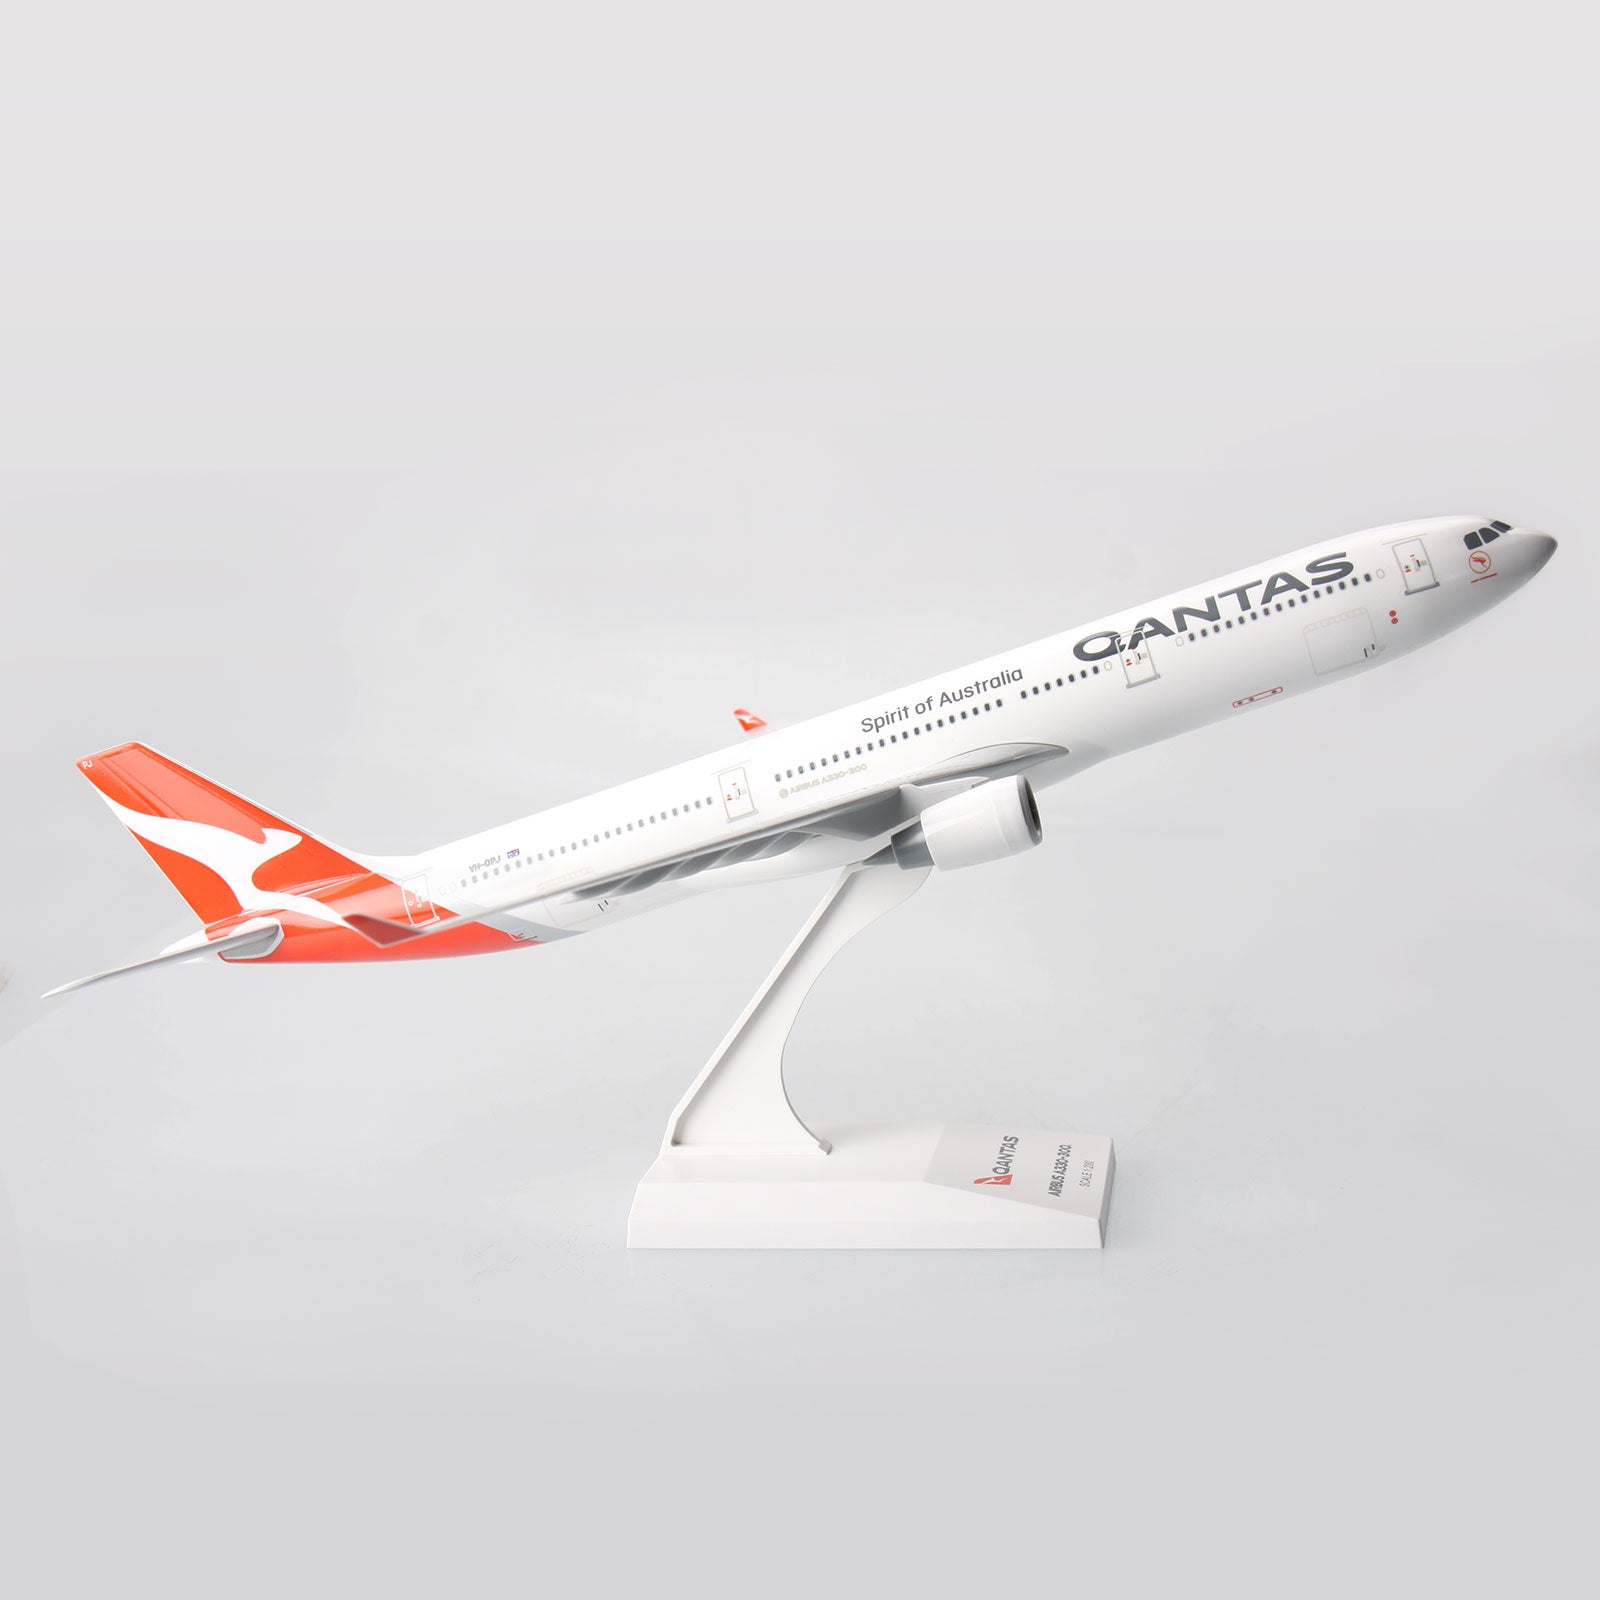 Details About Qantas Airbus A330 300 Vh Qpj 1 200 Scale Plastic Model Replica A330 Aircraft